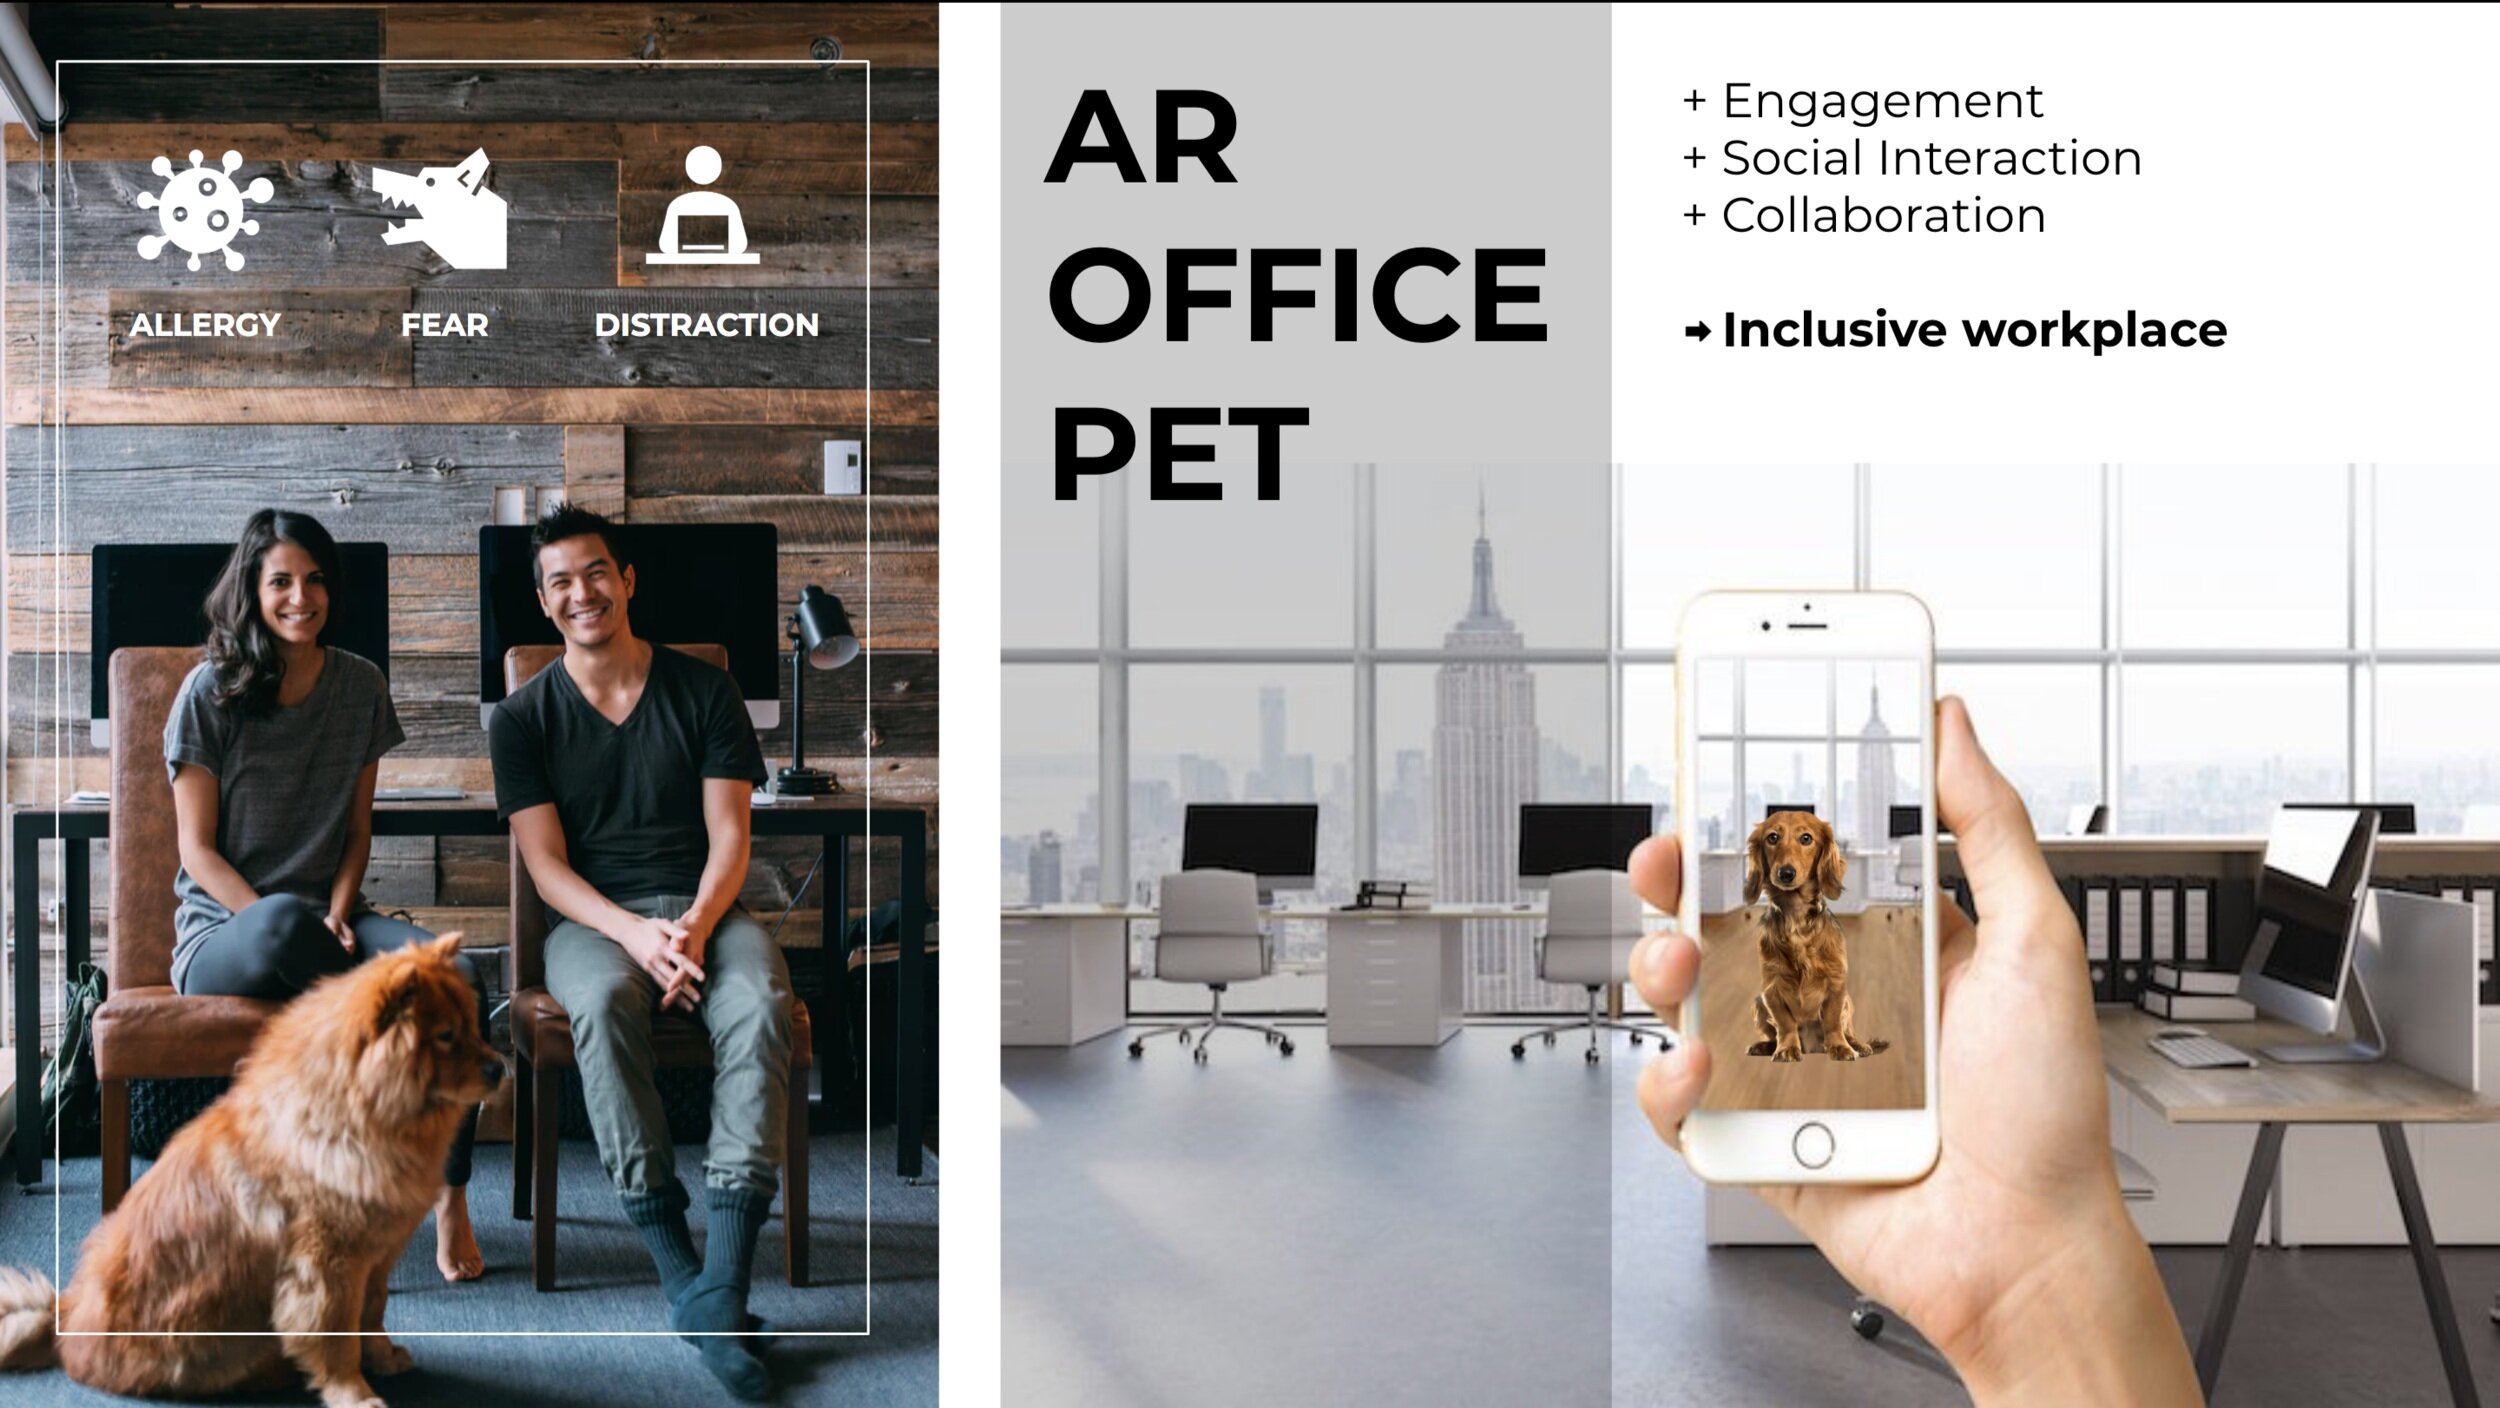 AR Office Pet